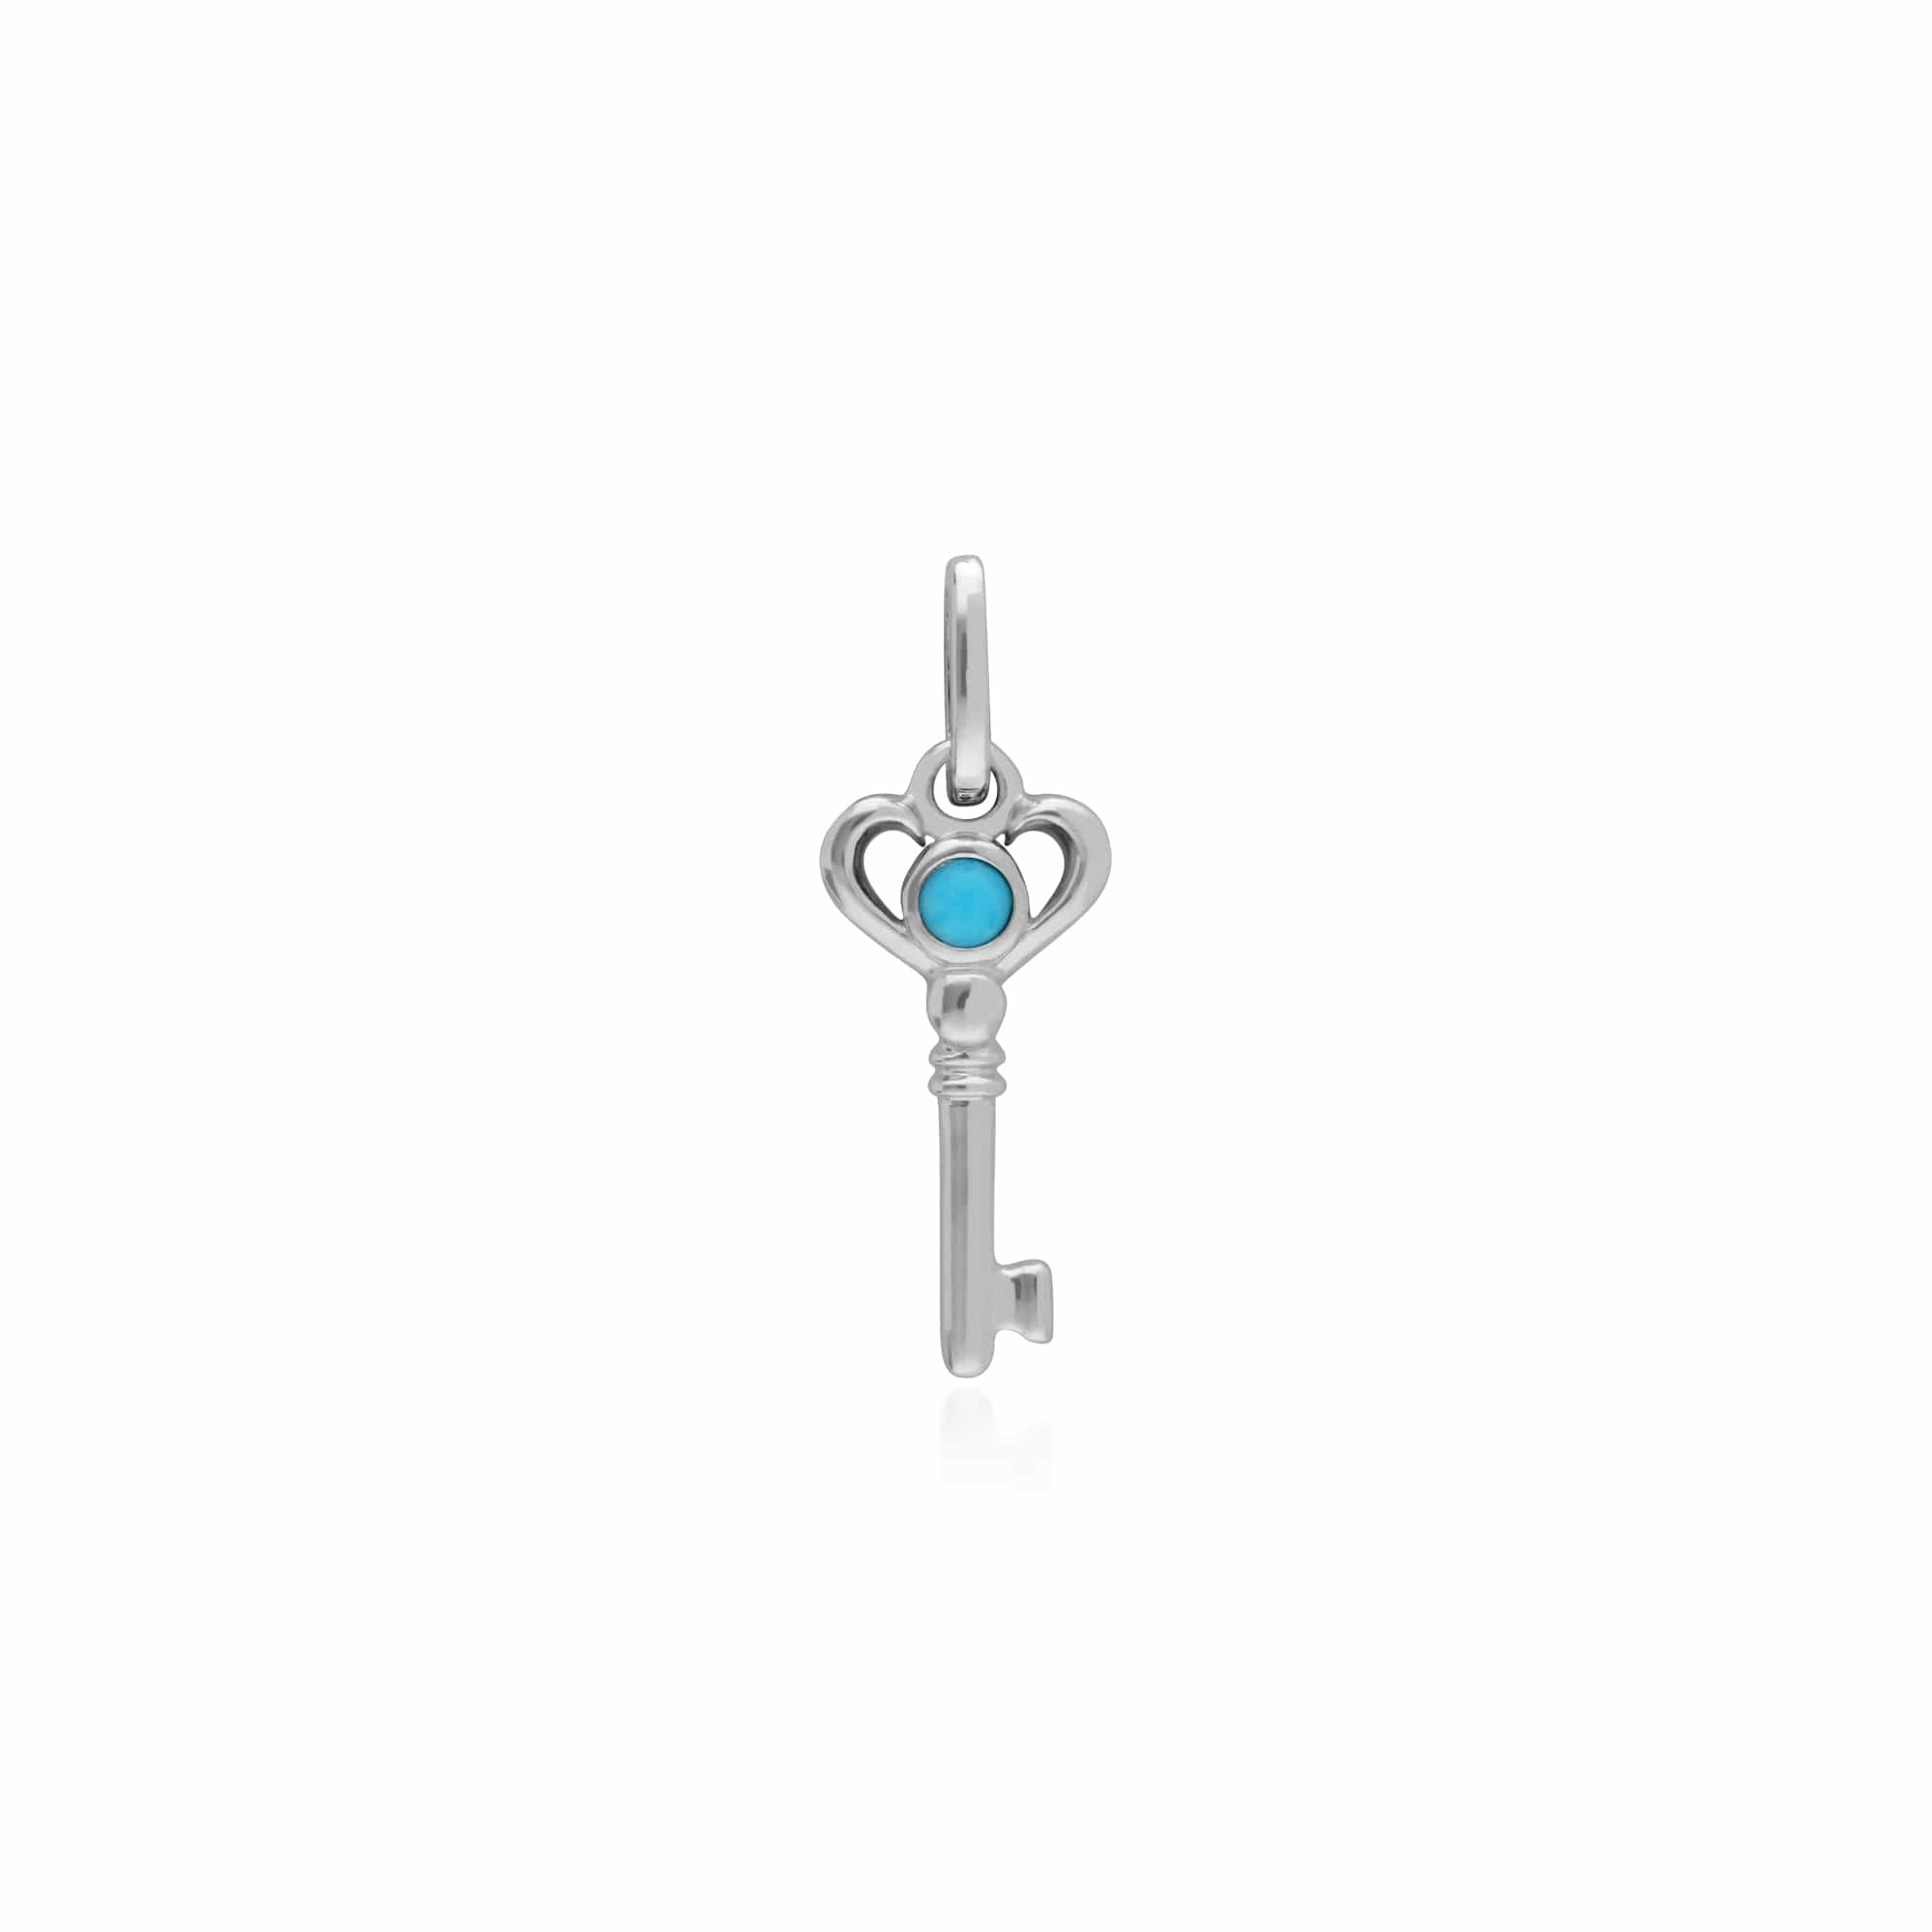 Gemondo Sterling Silver Turquoise Small Key Charm - Gemondo